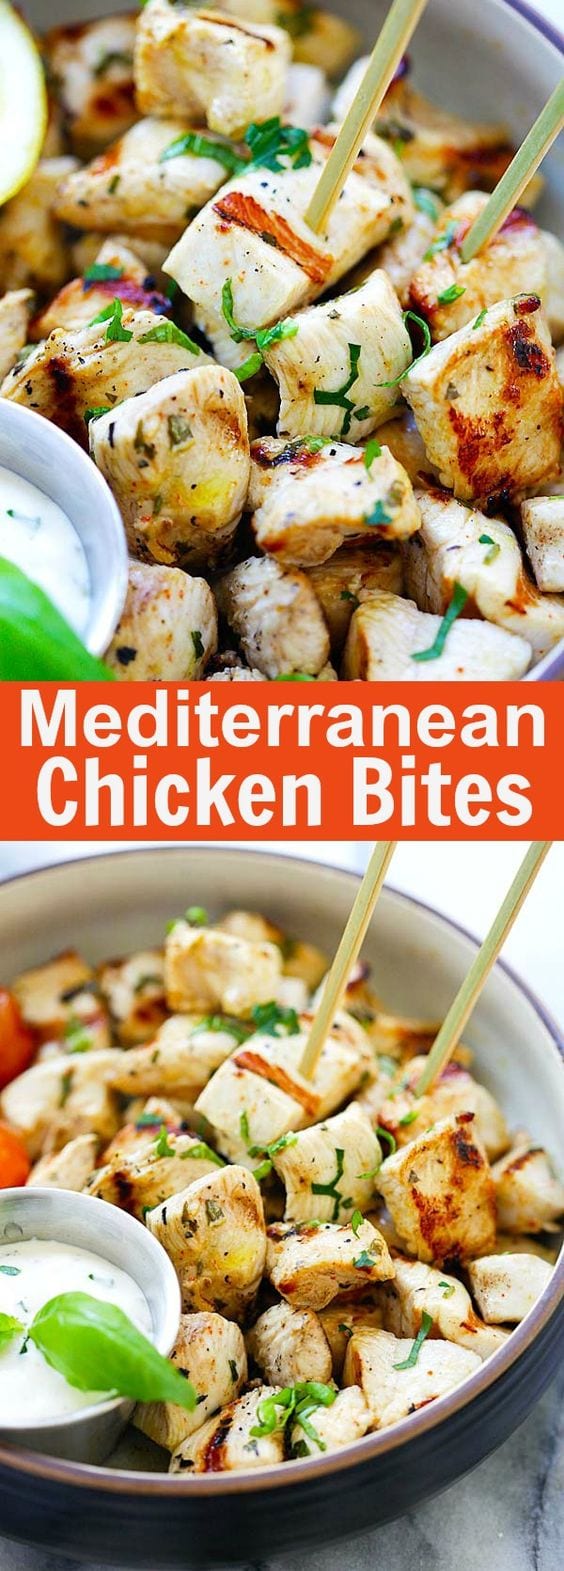 Mediterranean Chicken Bites – juicy, tender and the most flavorful chicken bites with Mediterranean marinade. So easy to make and delicious | rasamalaysia.com